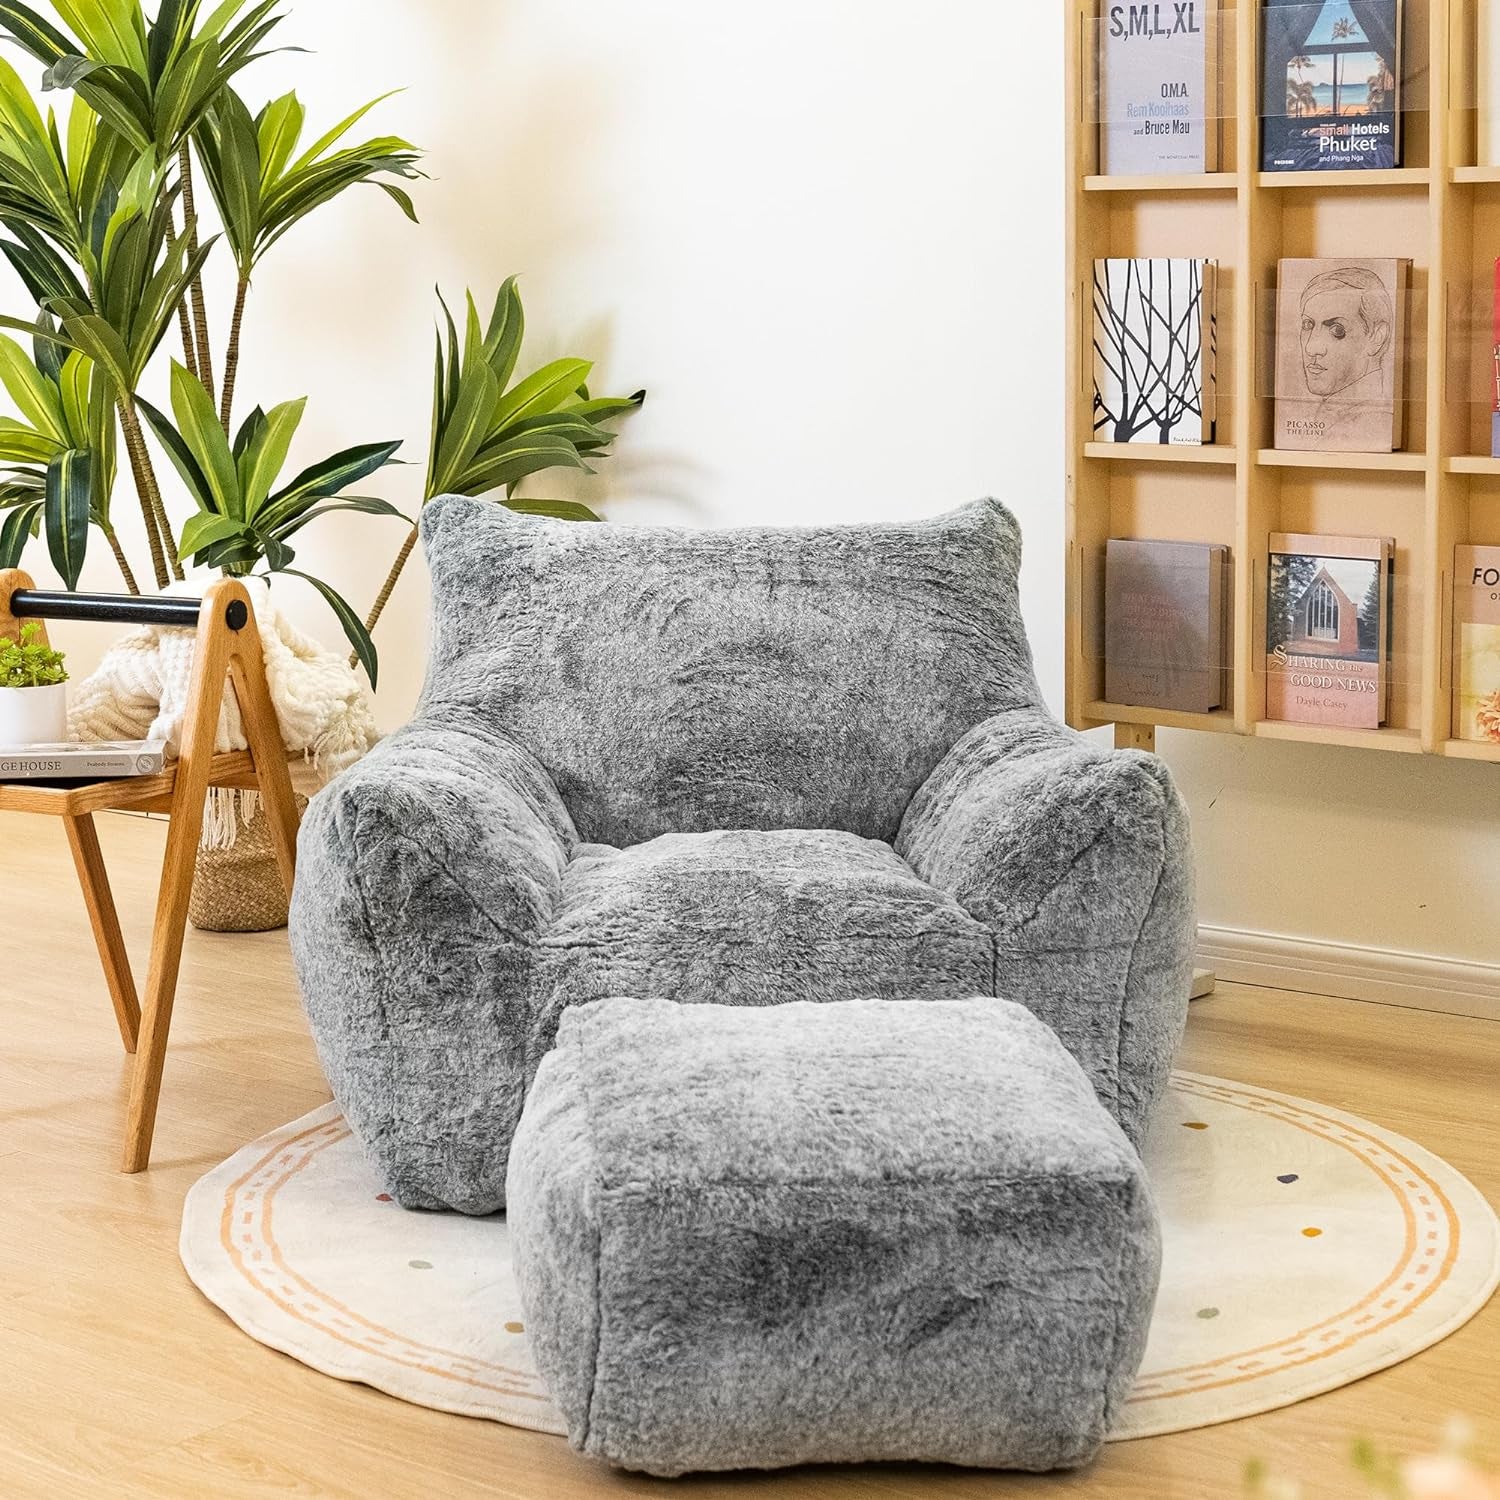 Bean Bag Chair with Ottoman, Armrest Bean Bag Chair with Filler, Ultra Soft Fluffy Faux Fur Bean Bag Chair with Foot Rest, Plush Lazy Sofa with Foot Stool for Living Room, Dorm